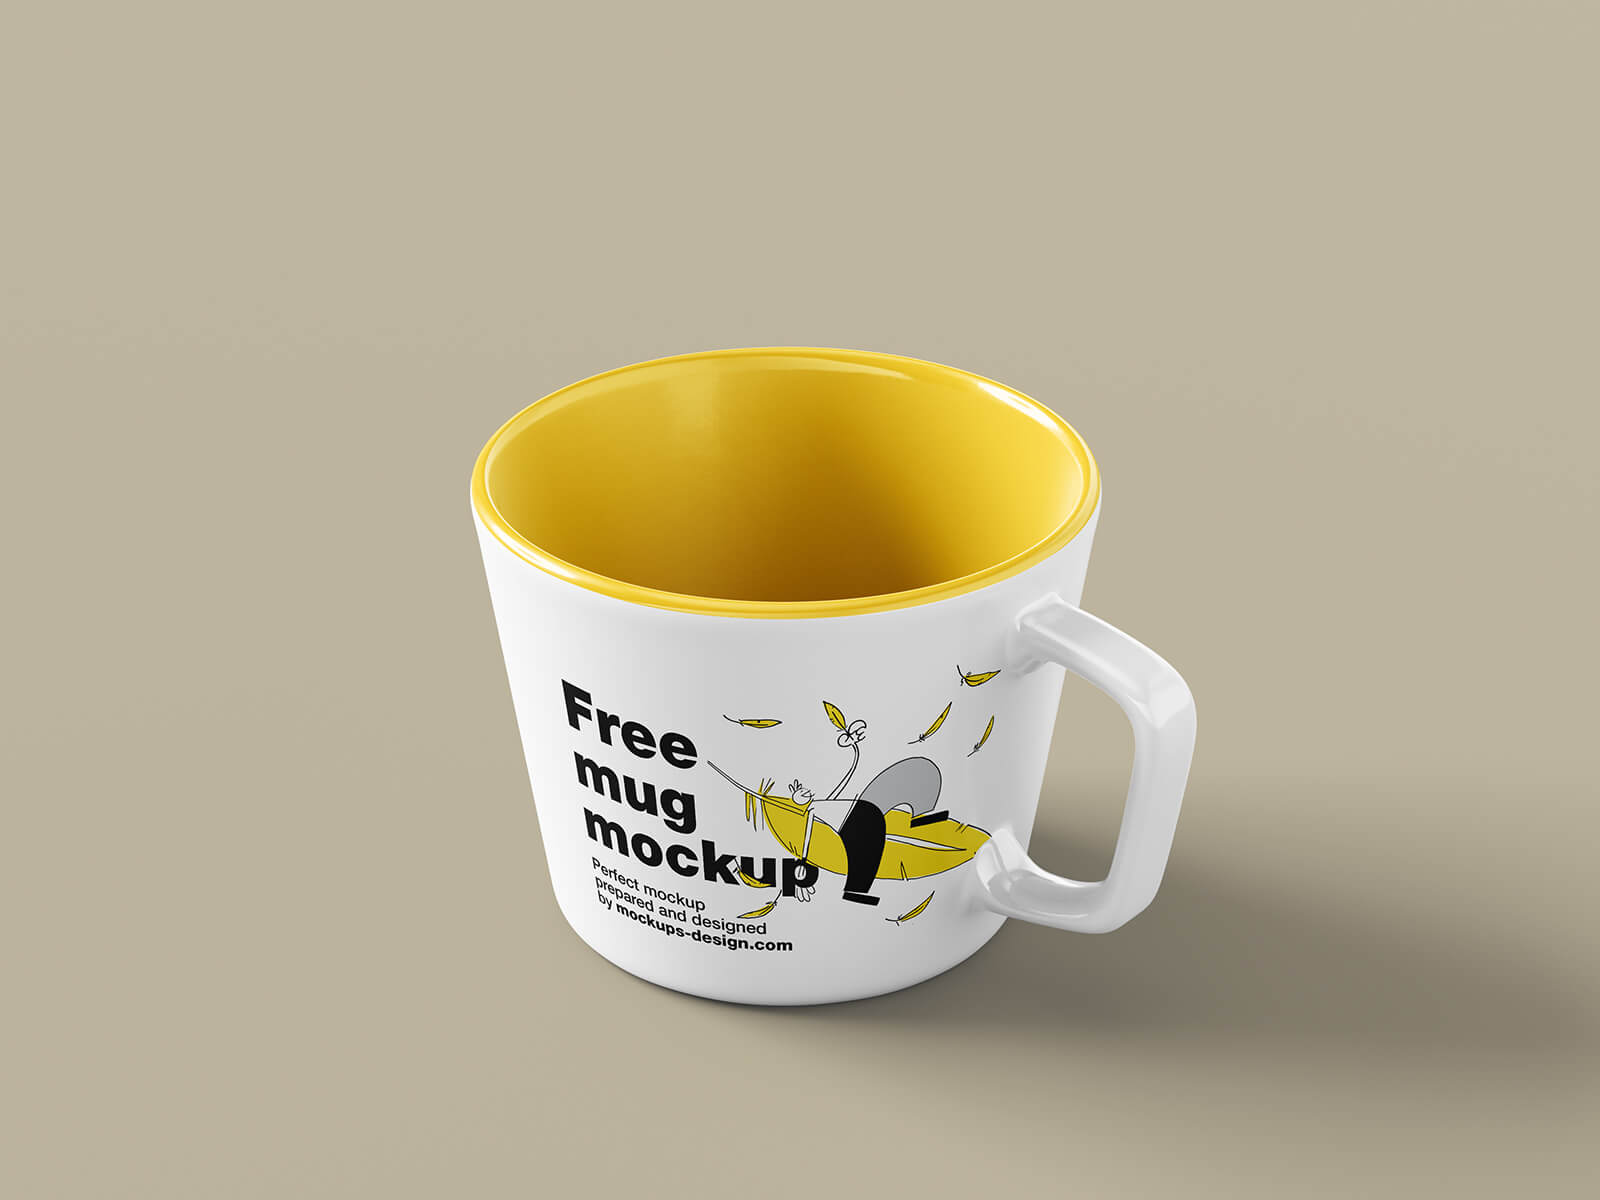 Small Size Low Cup / Mug Mockup